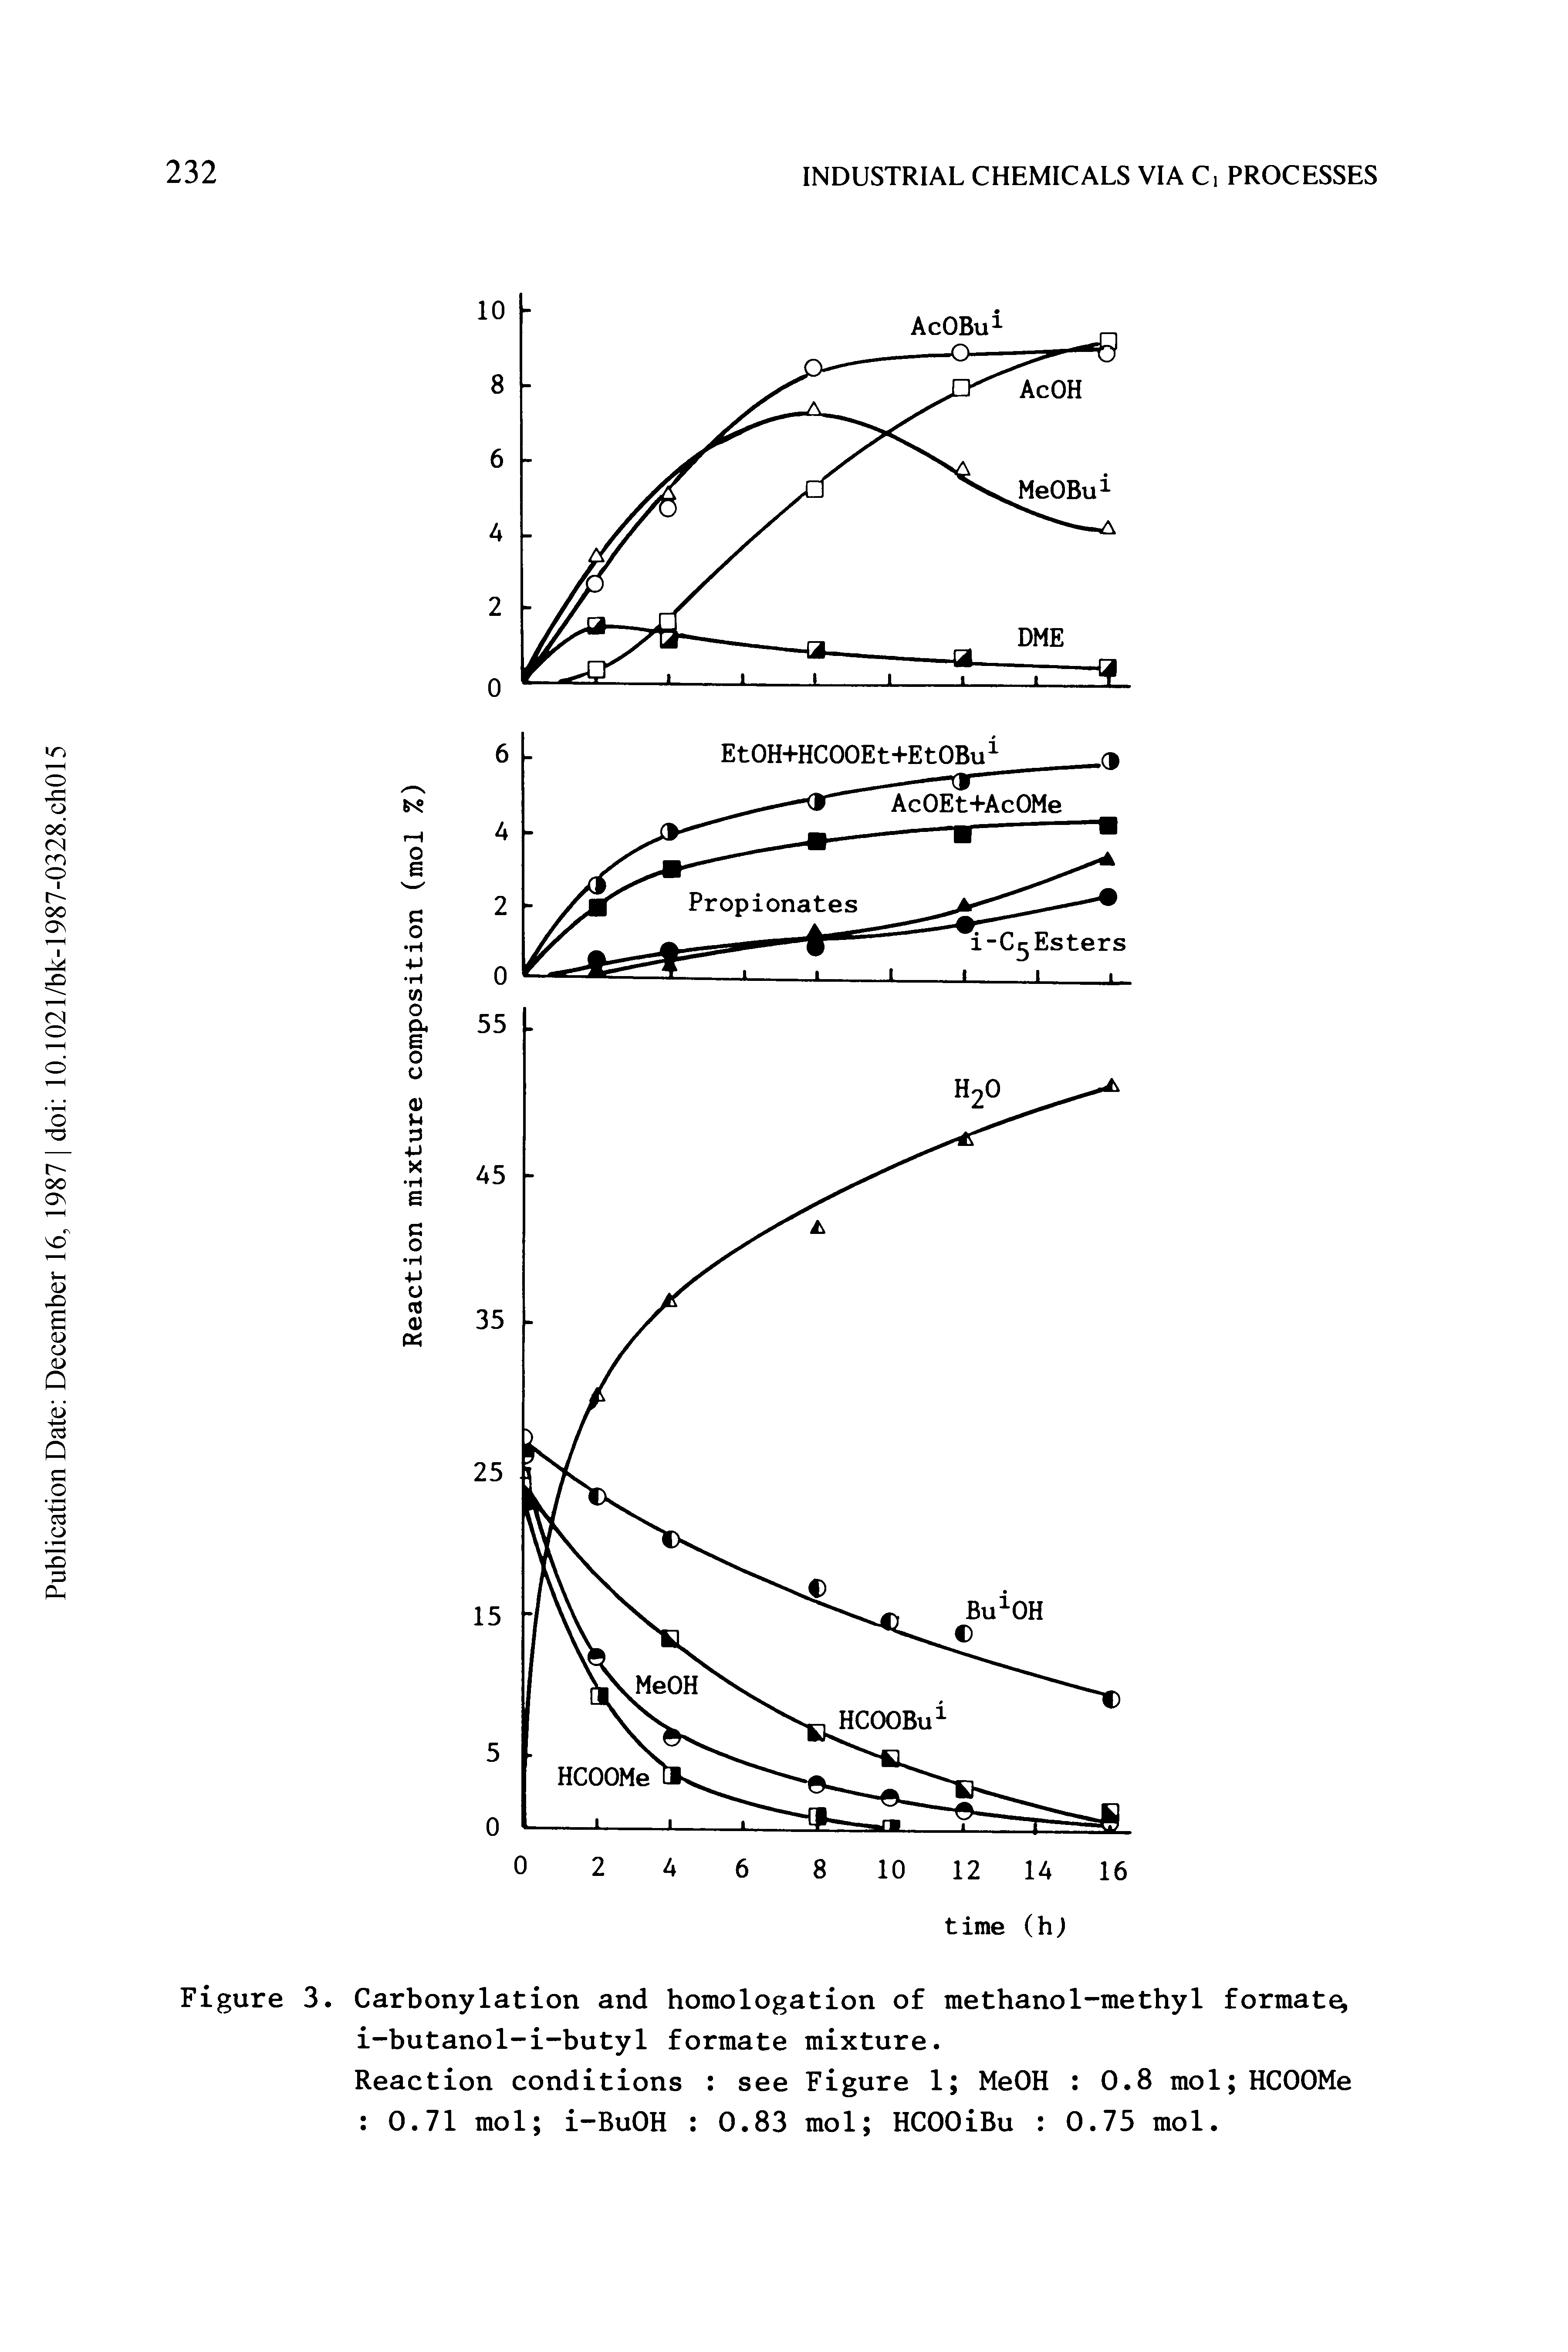 Figure 3. Carbonylation and homologation of methanol-methyl formate, i-butanol-i-butyl formate mixture.